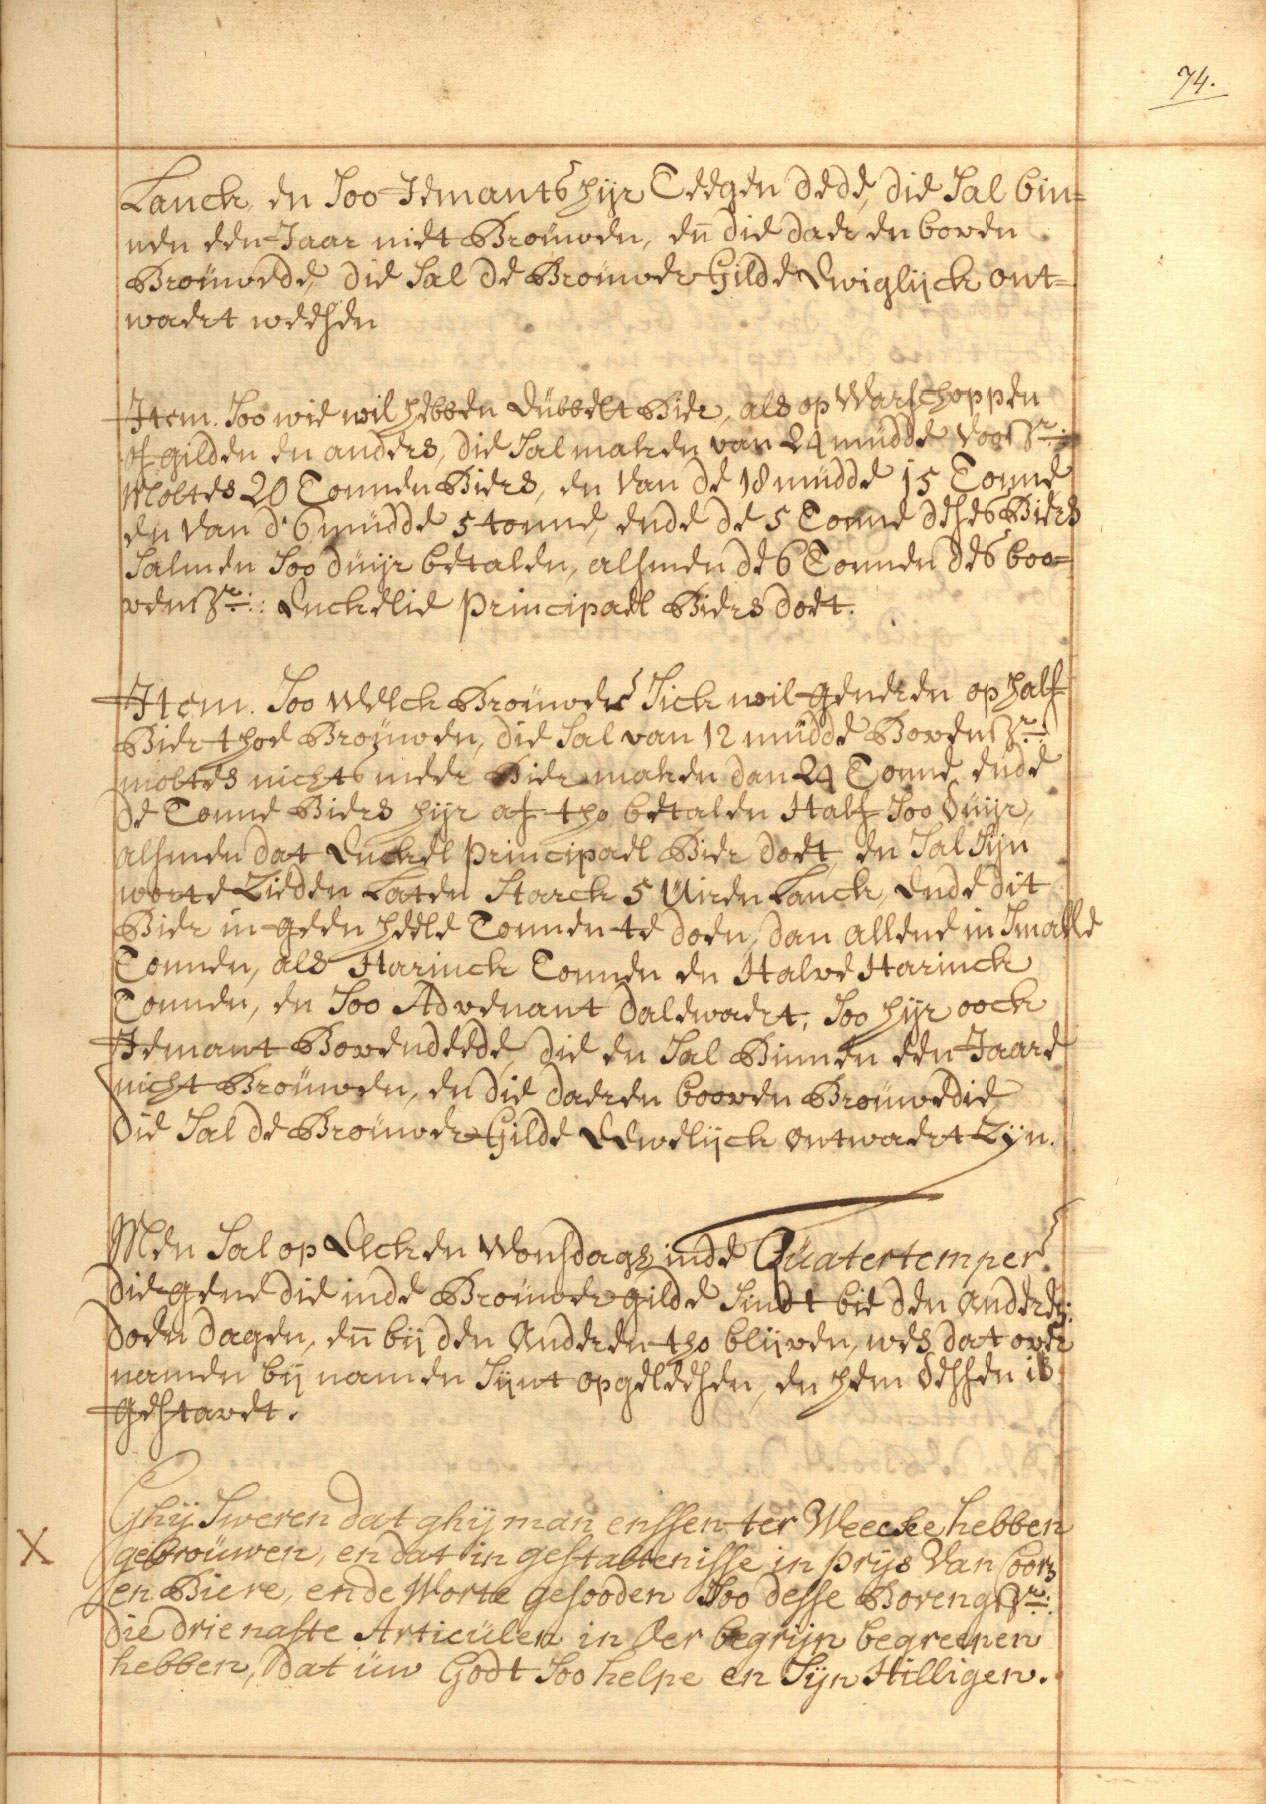 DIARIUM van EGBERT ALTING 1553 - 1594, Rijks Geschiedkundige Publicatiën, Grote serie 111
Dr. W.J. Formsma - Mr. R. Van Roijen. Nijhoff 1964 